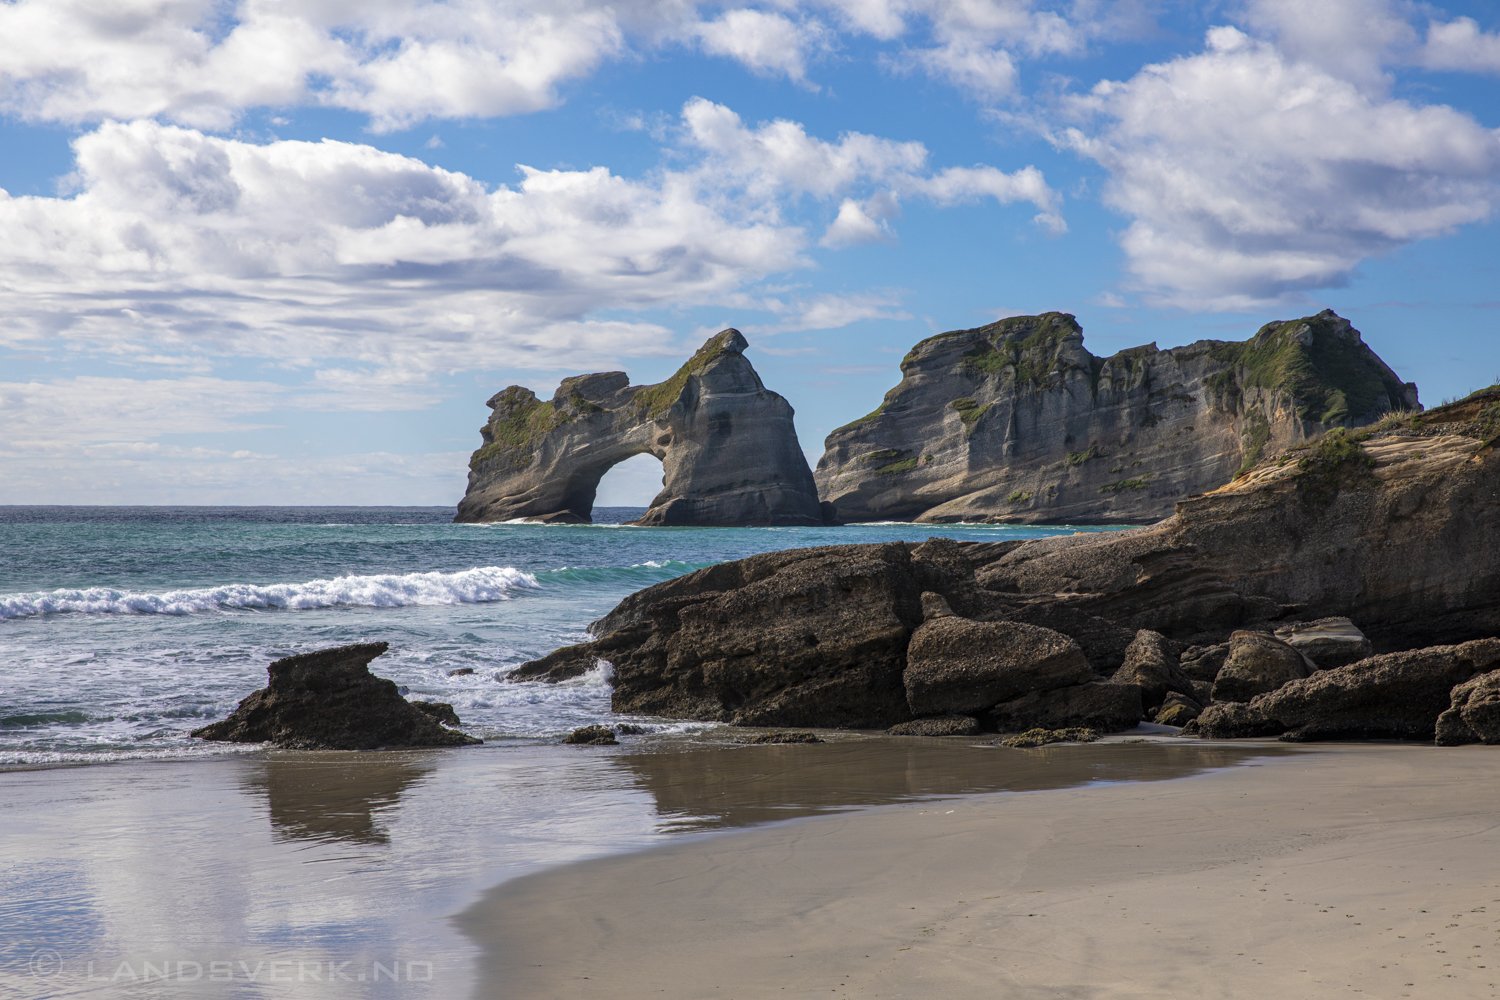 Wharakiri Beach, Takaka, New Zealand.

(Canon EOS 5D Mark IV / Canon EF 24-70mm f/2.8 L II USM)